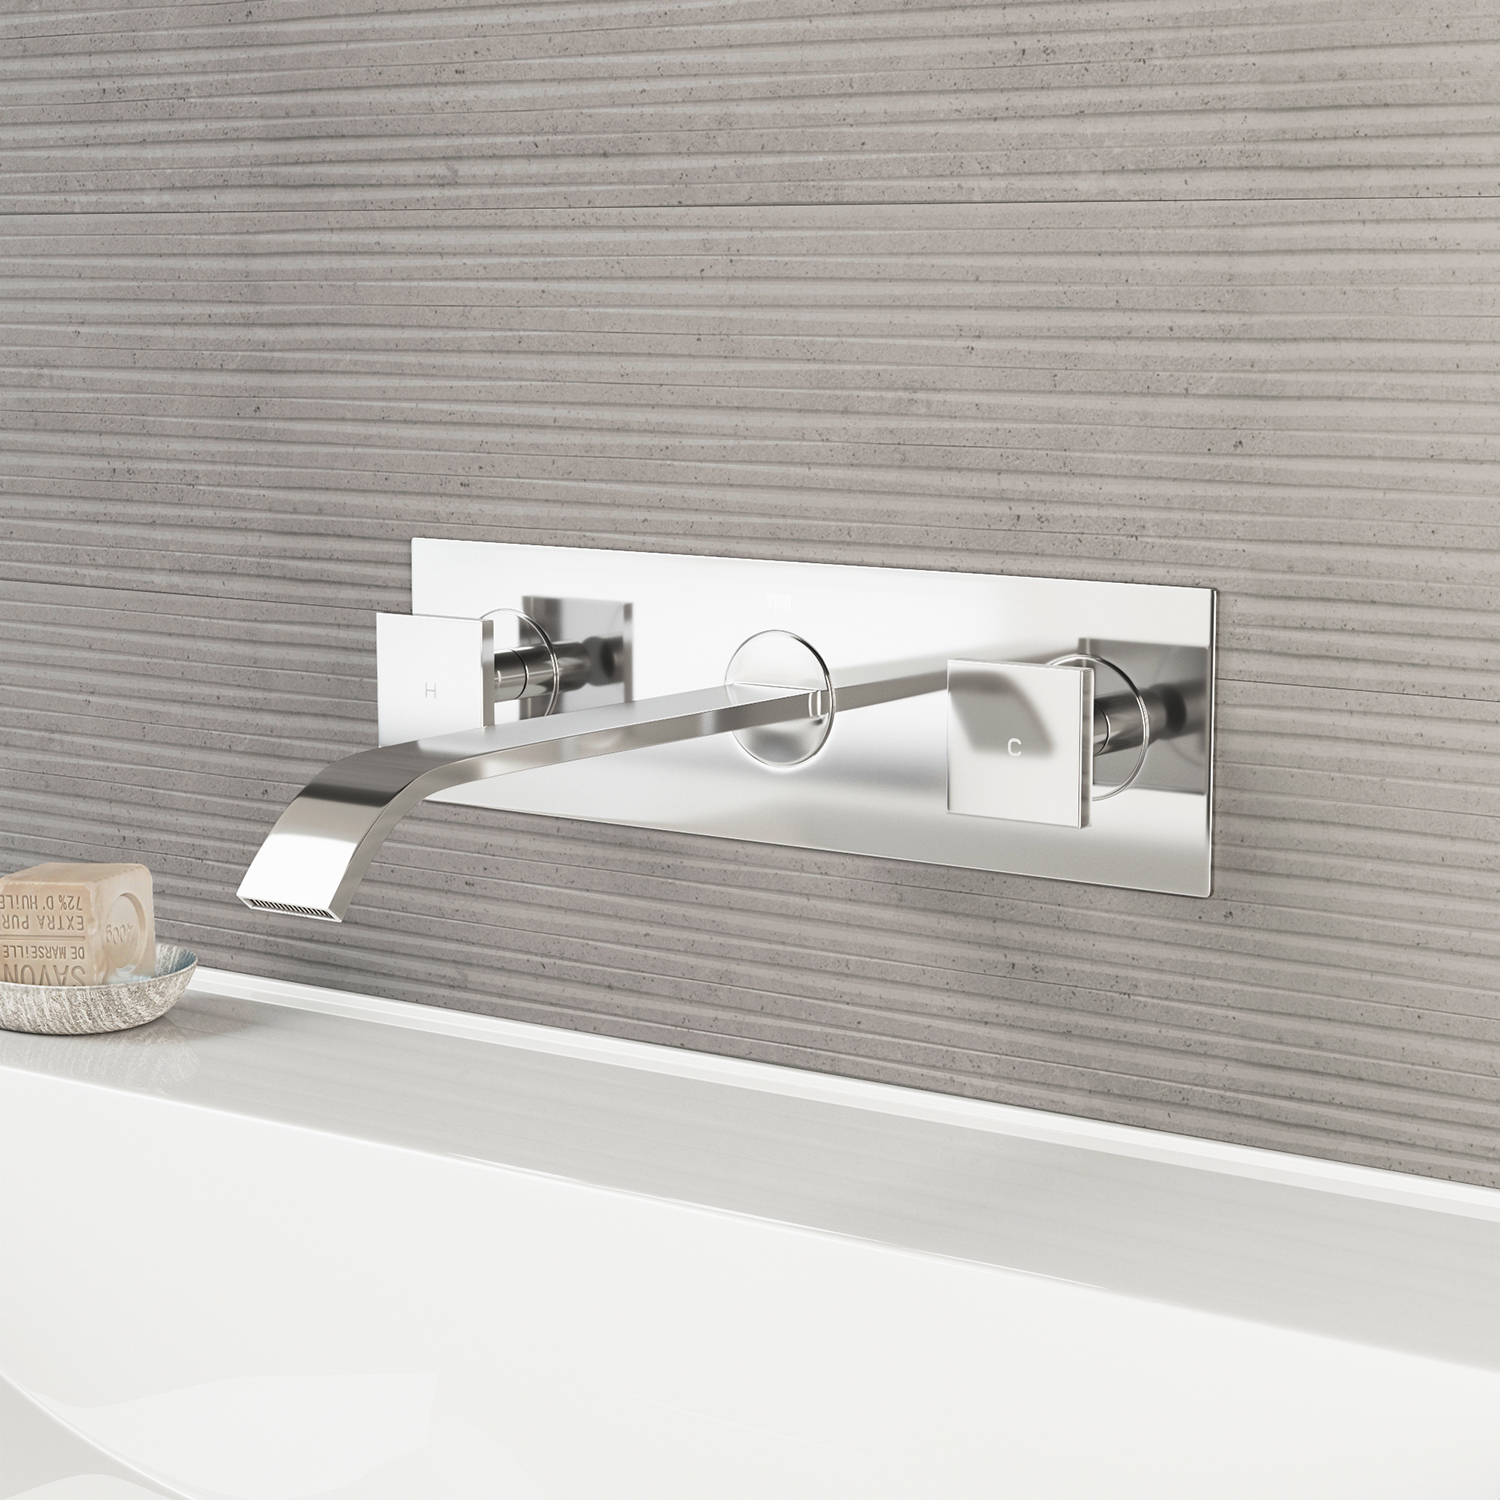 VIGO Titus Two Handle Wall Mount Bathroom Faucet in Chrome - image 2 of 10